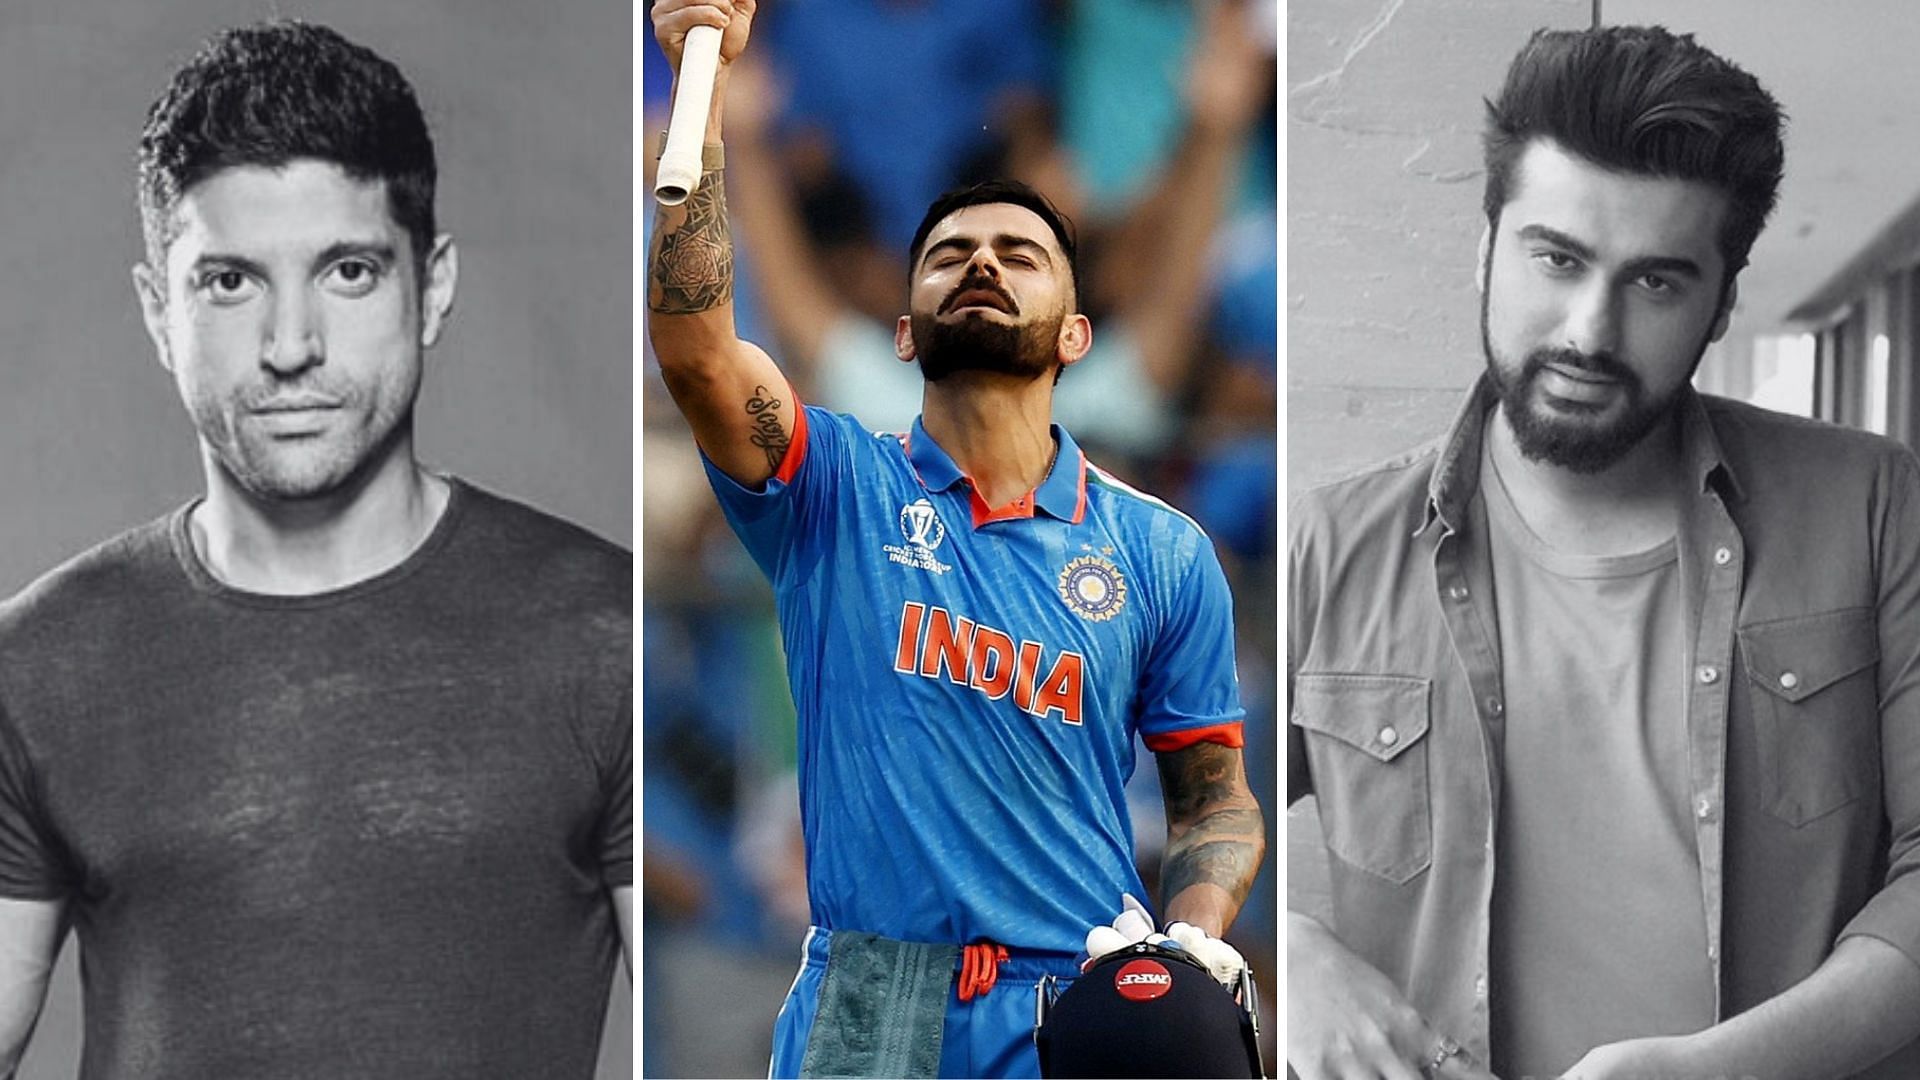 <div class="paragraphs"><p>Arjun Kapoor, Farhan Akhtar Celebrate Virat Kohli's 50th ODI Centuries</p></div>